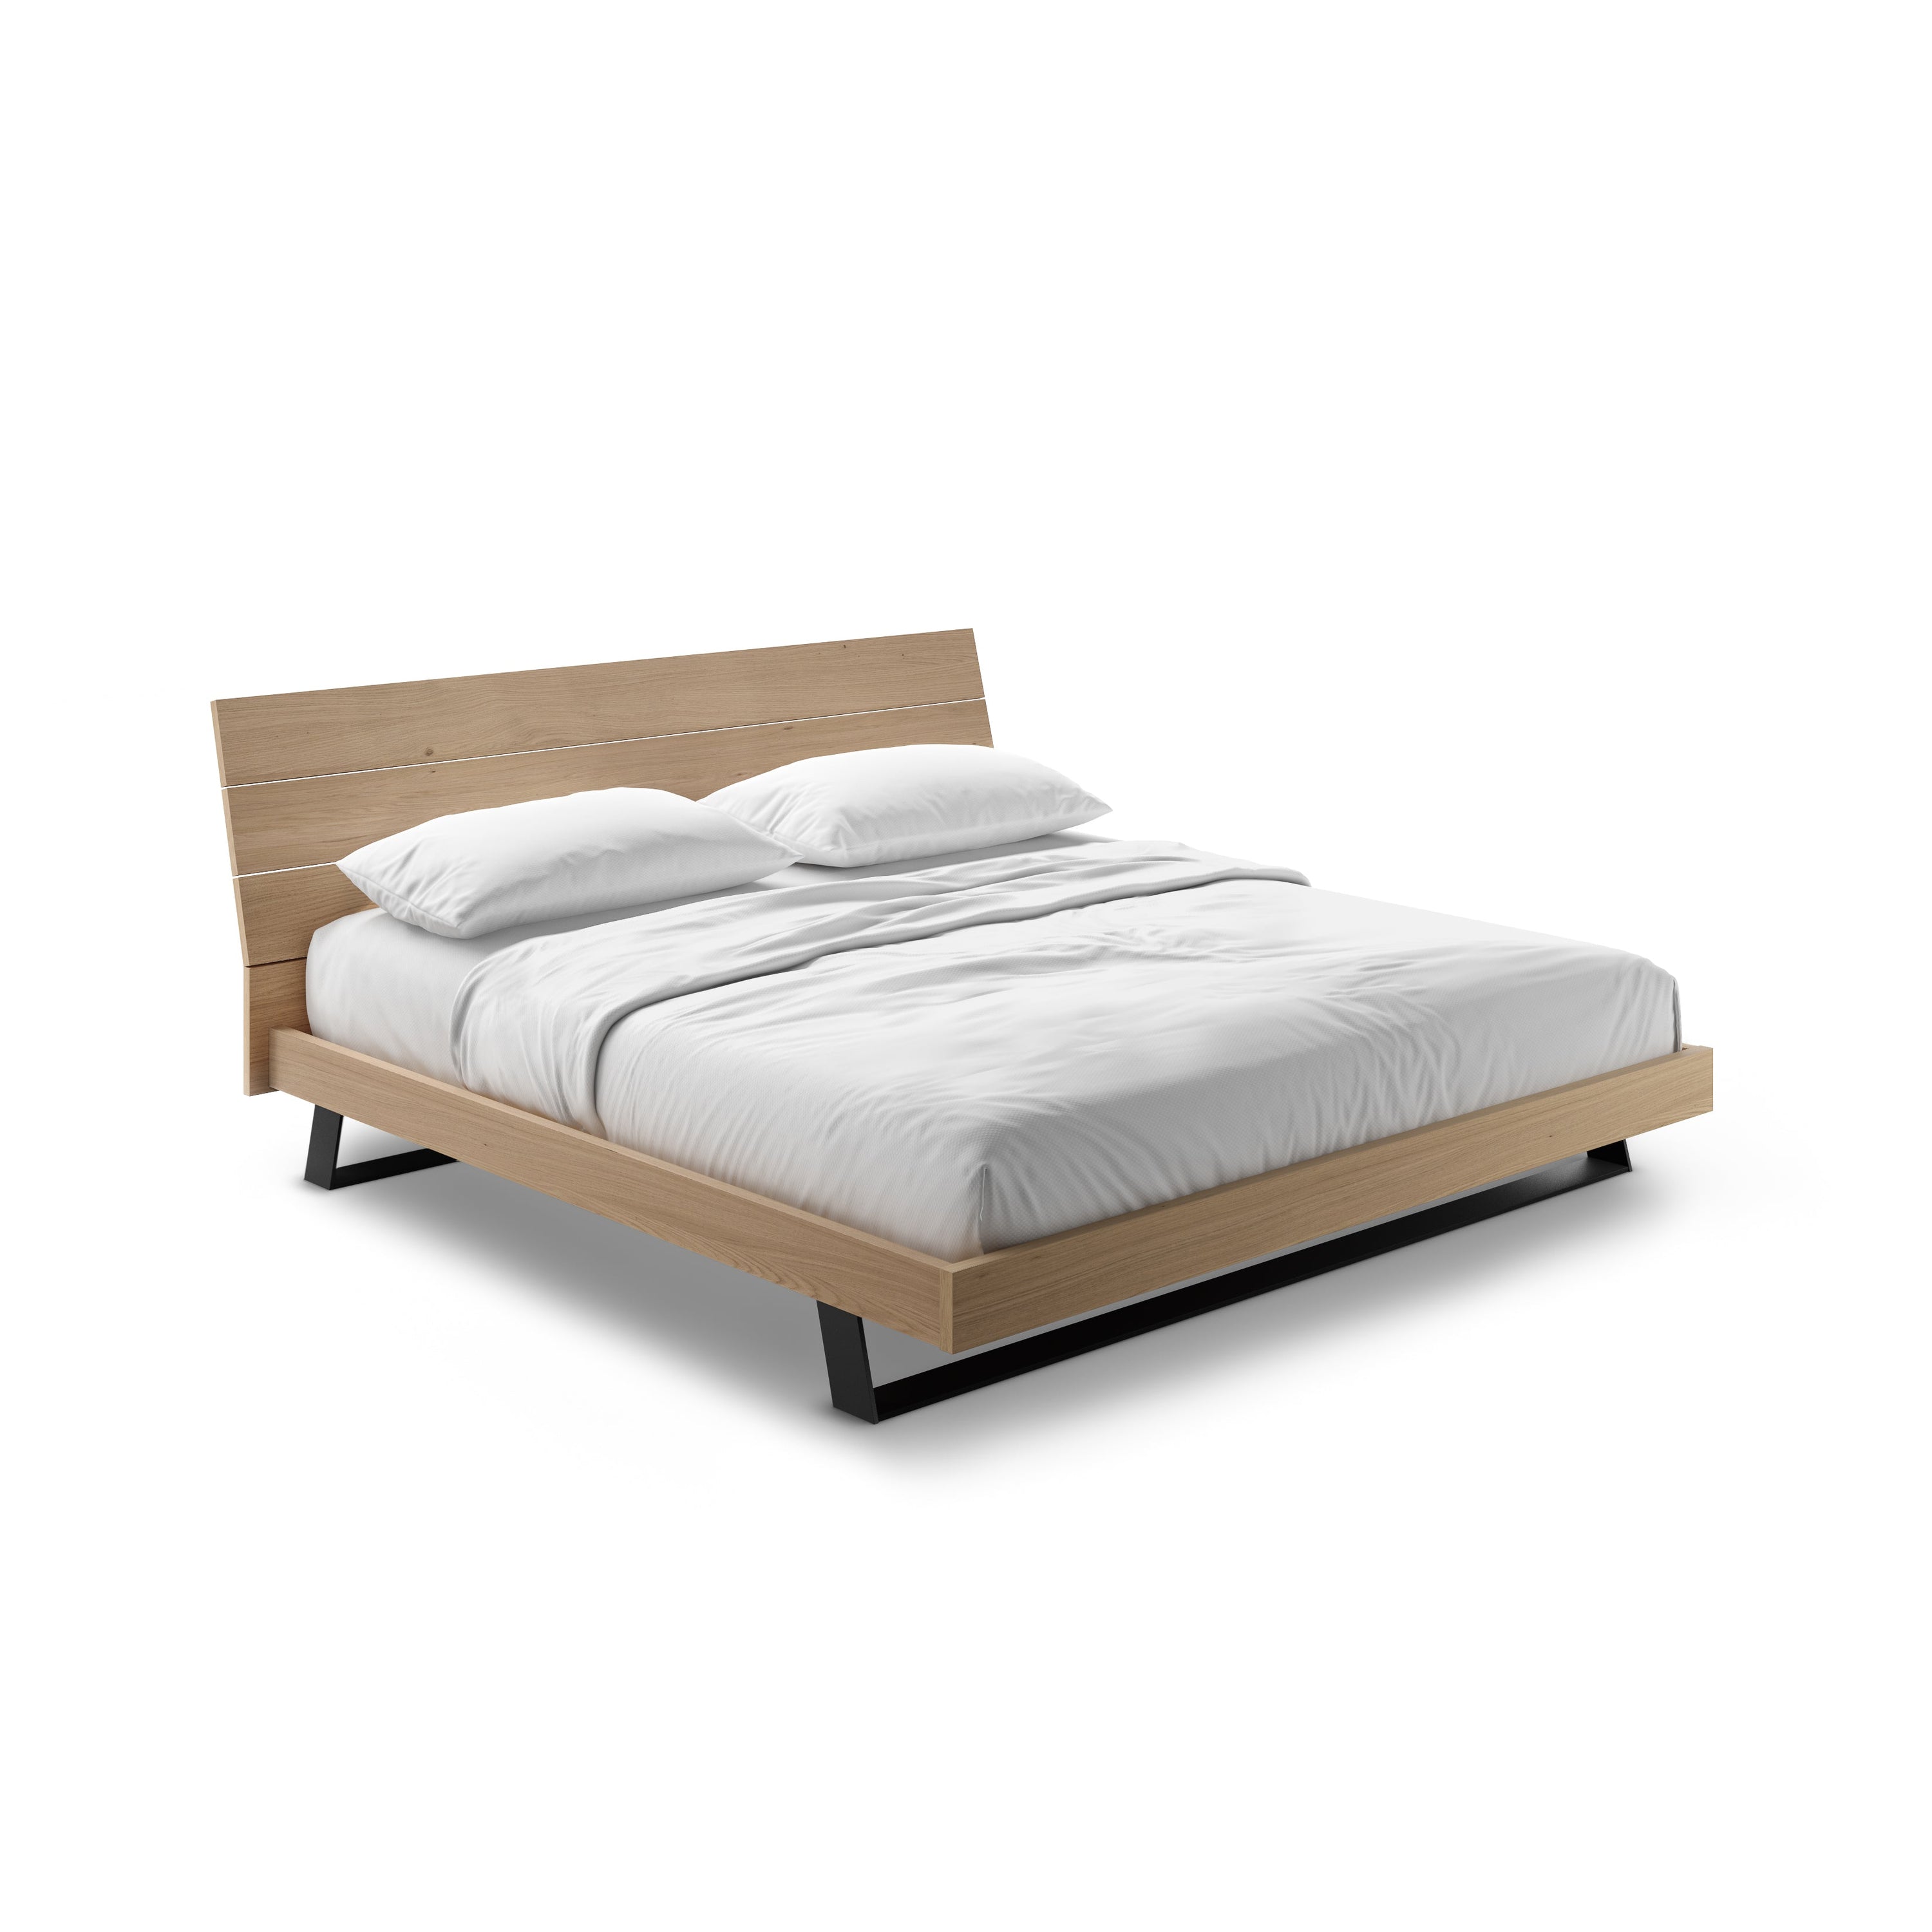 Bella Bed with Wood Headboard